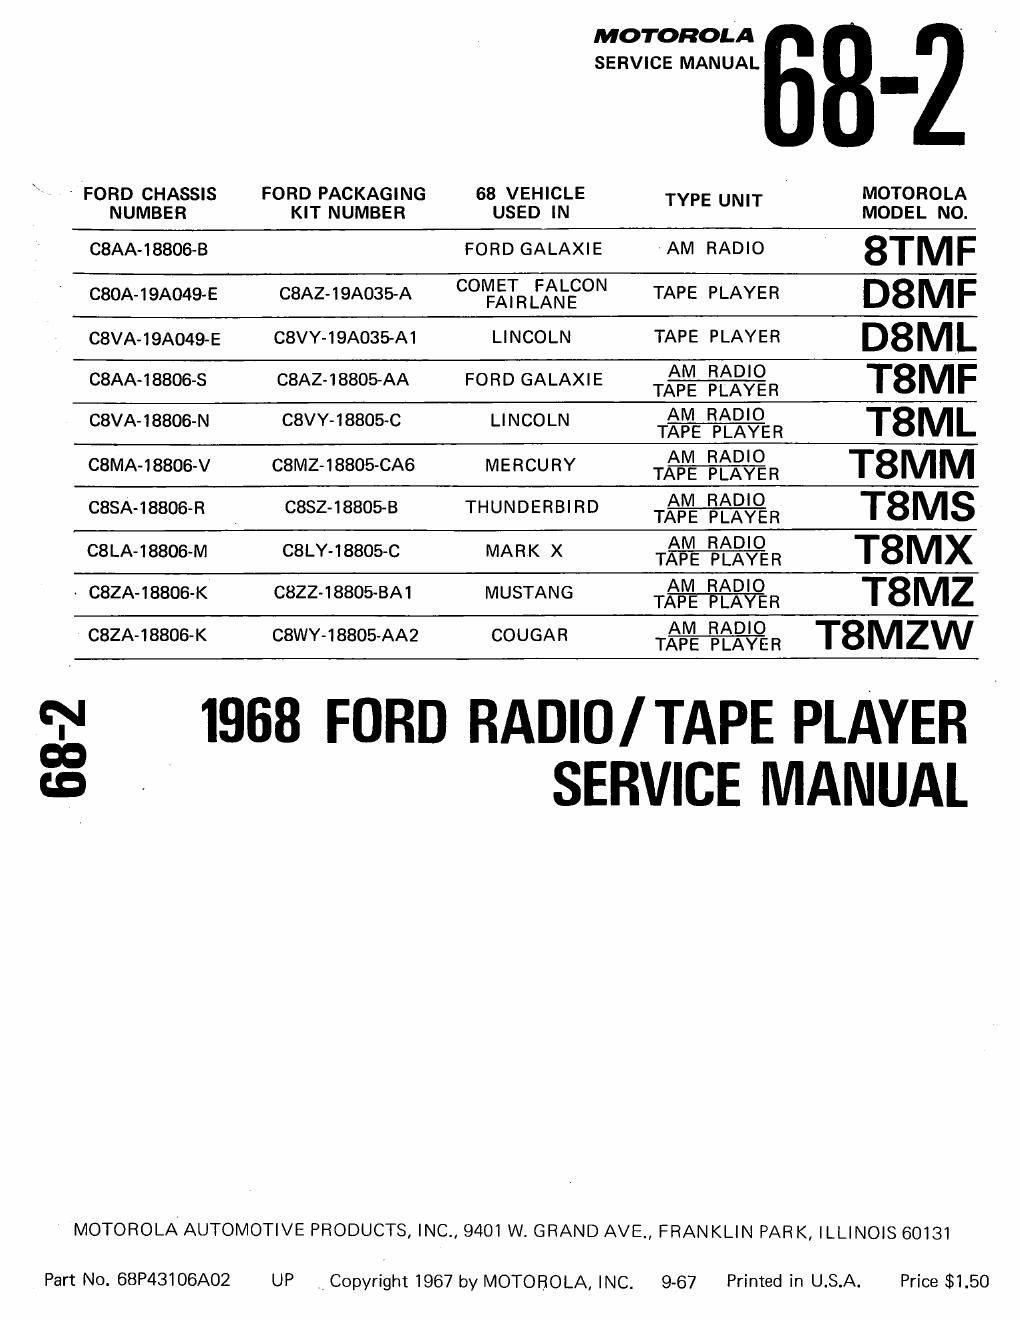 motorola d 8 mf service manual